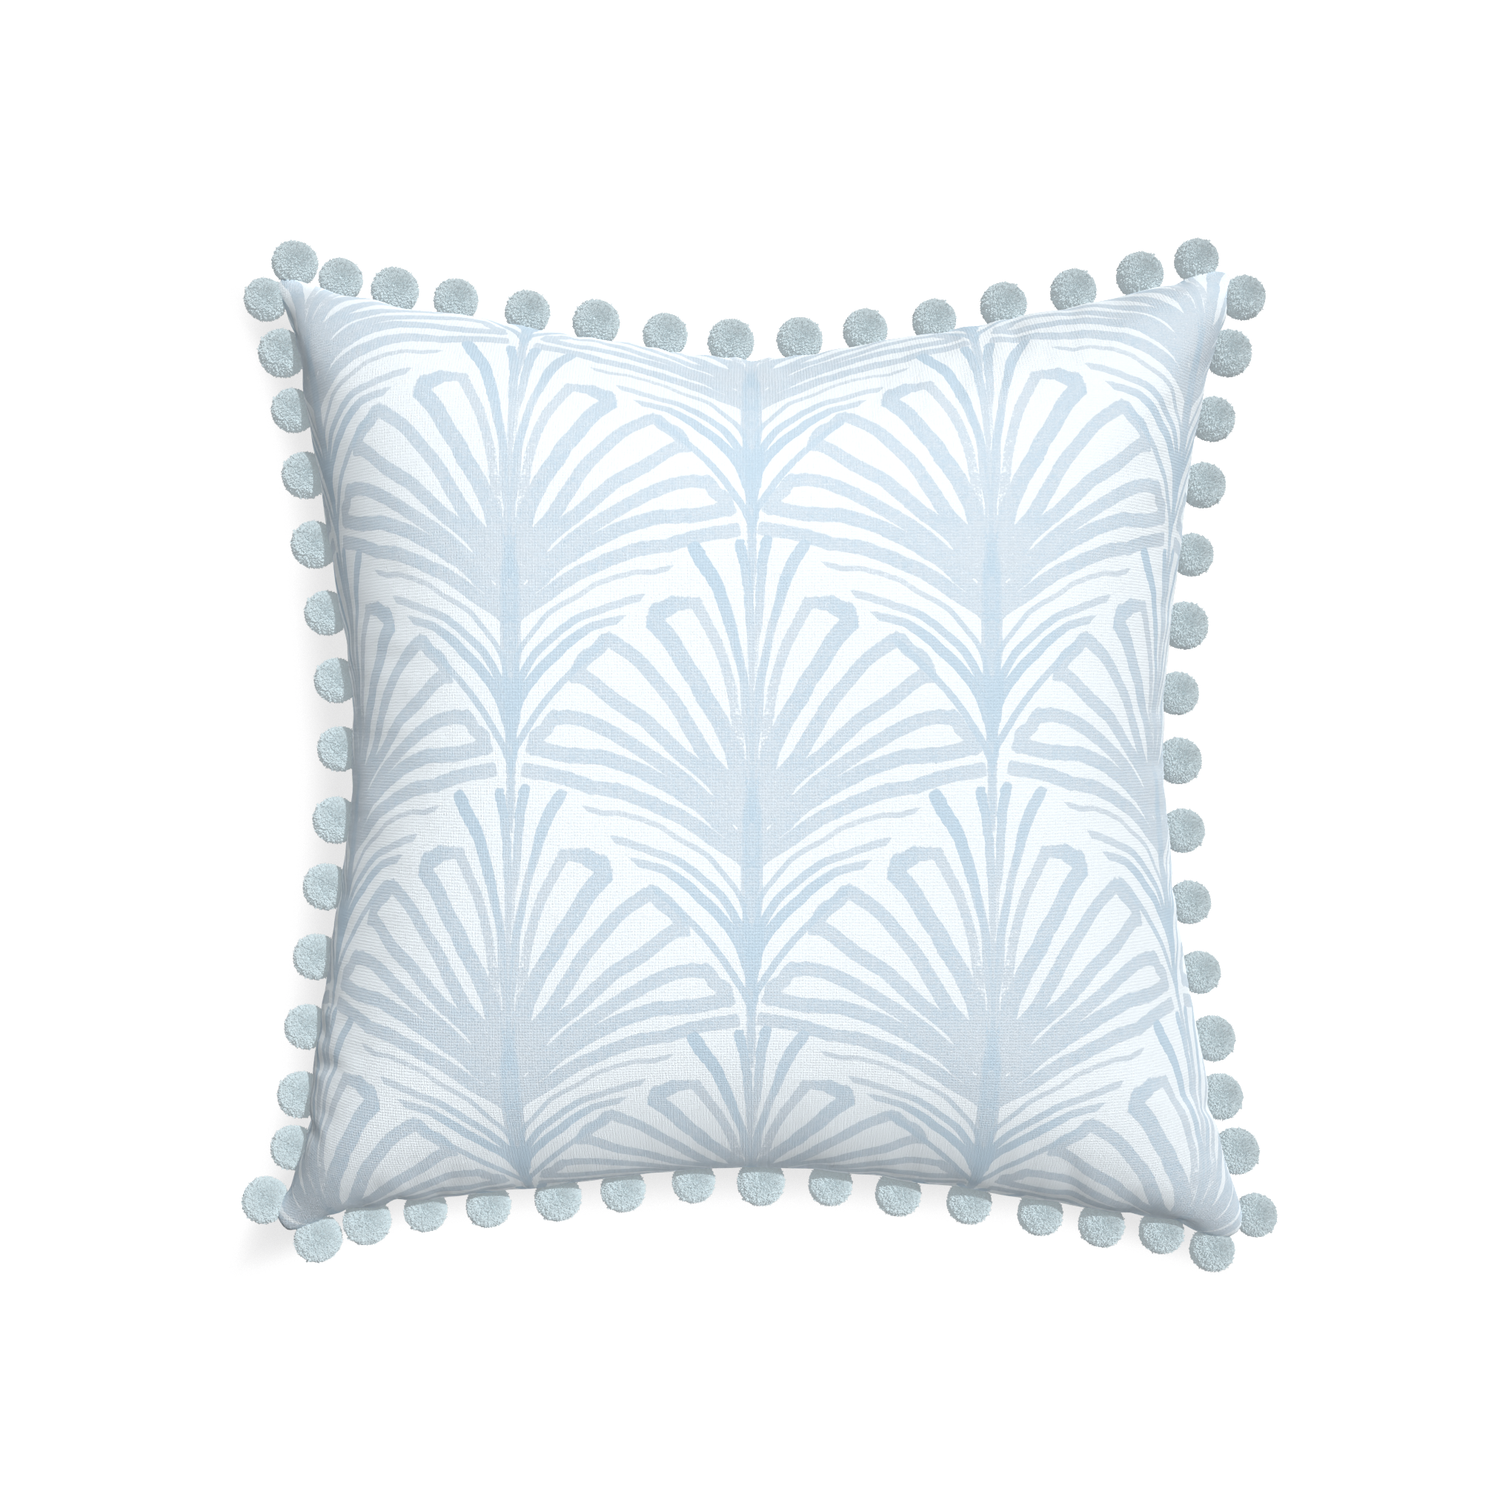 22-square suzy sky custom pillow with powder pom pom on white background